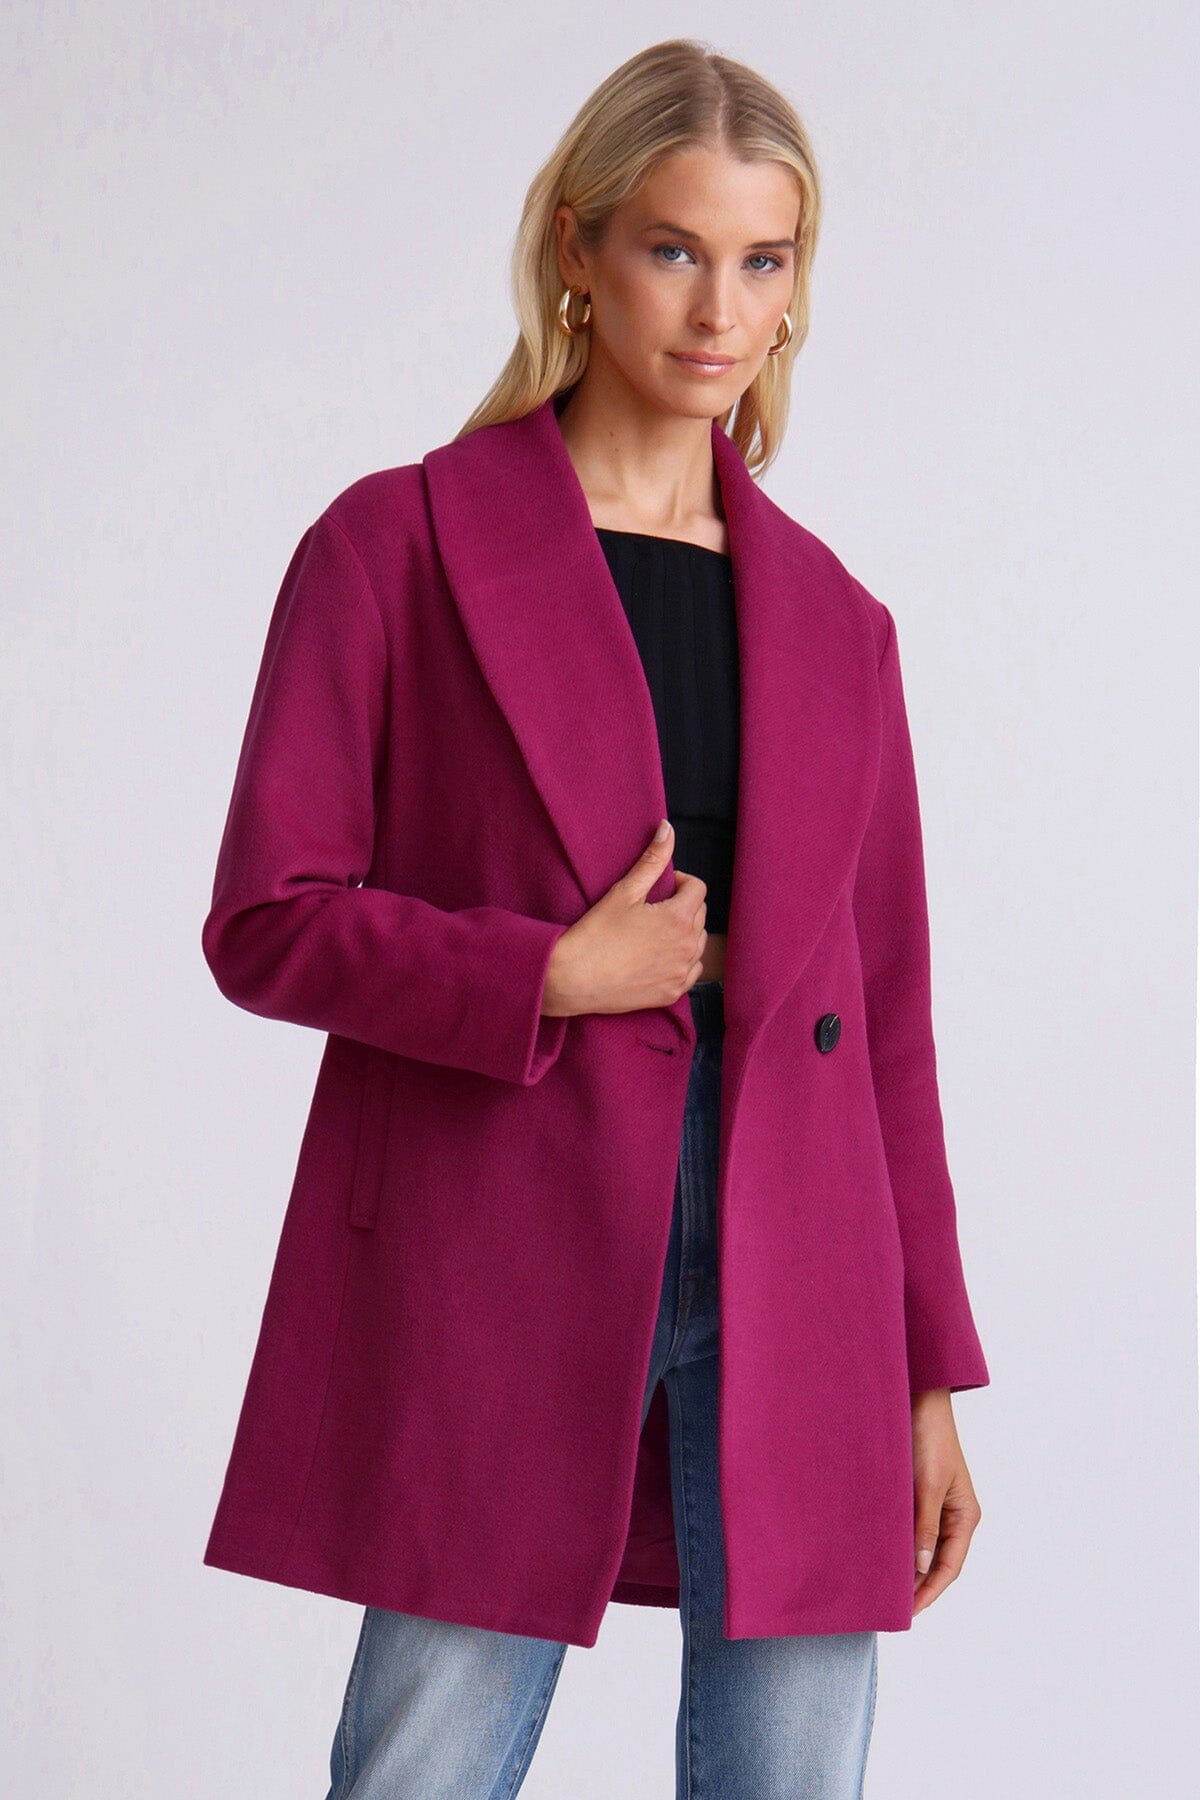 Berry Purple shawl collar twill peacoat coat - figure flattering date night peacoats for women